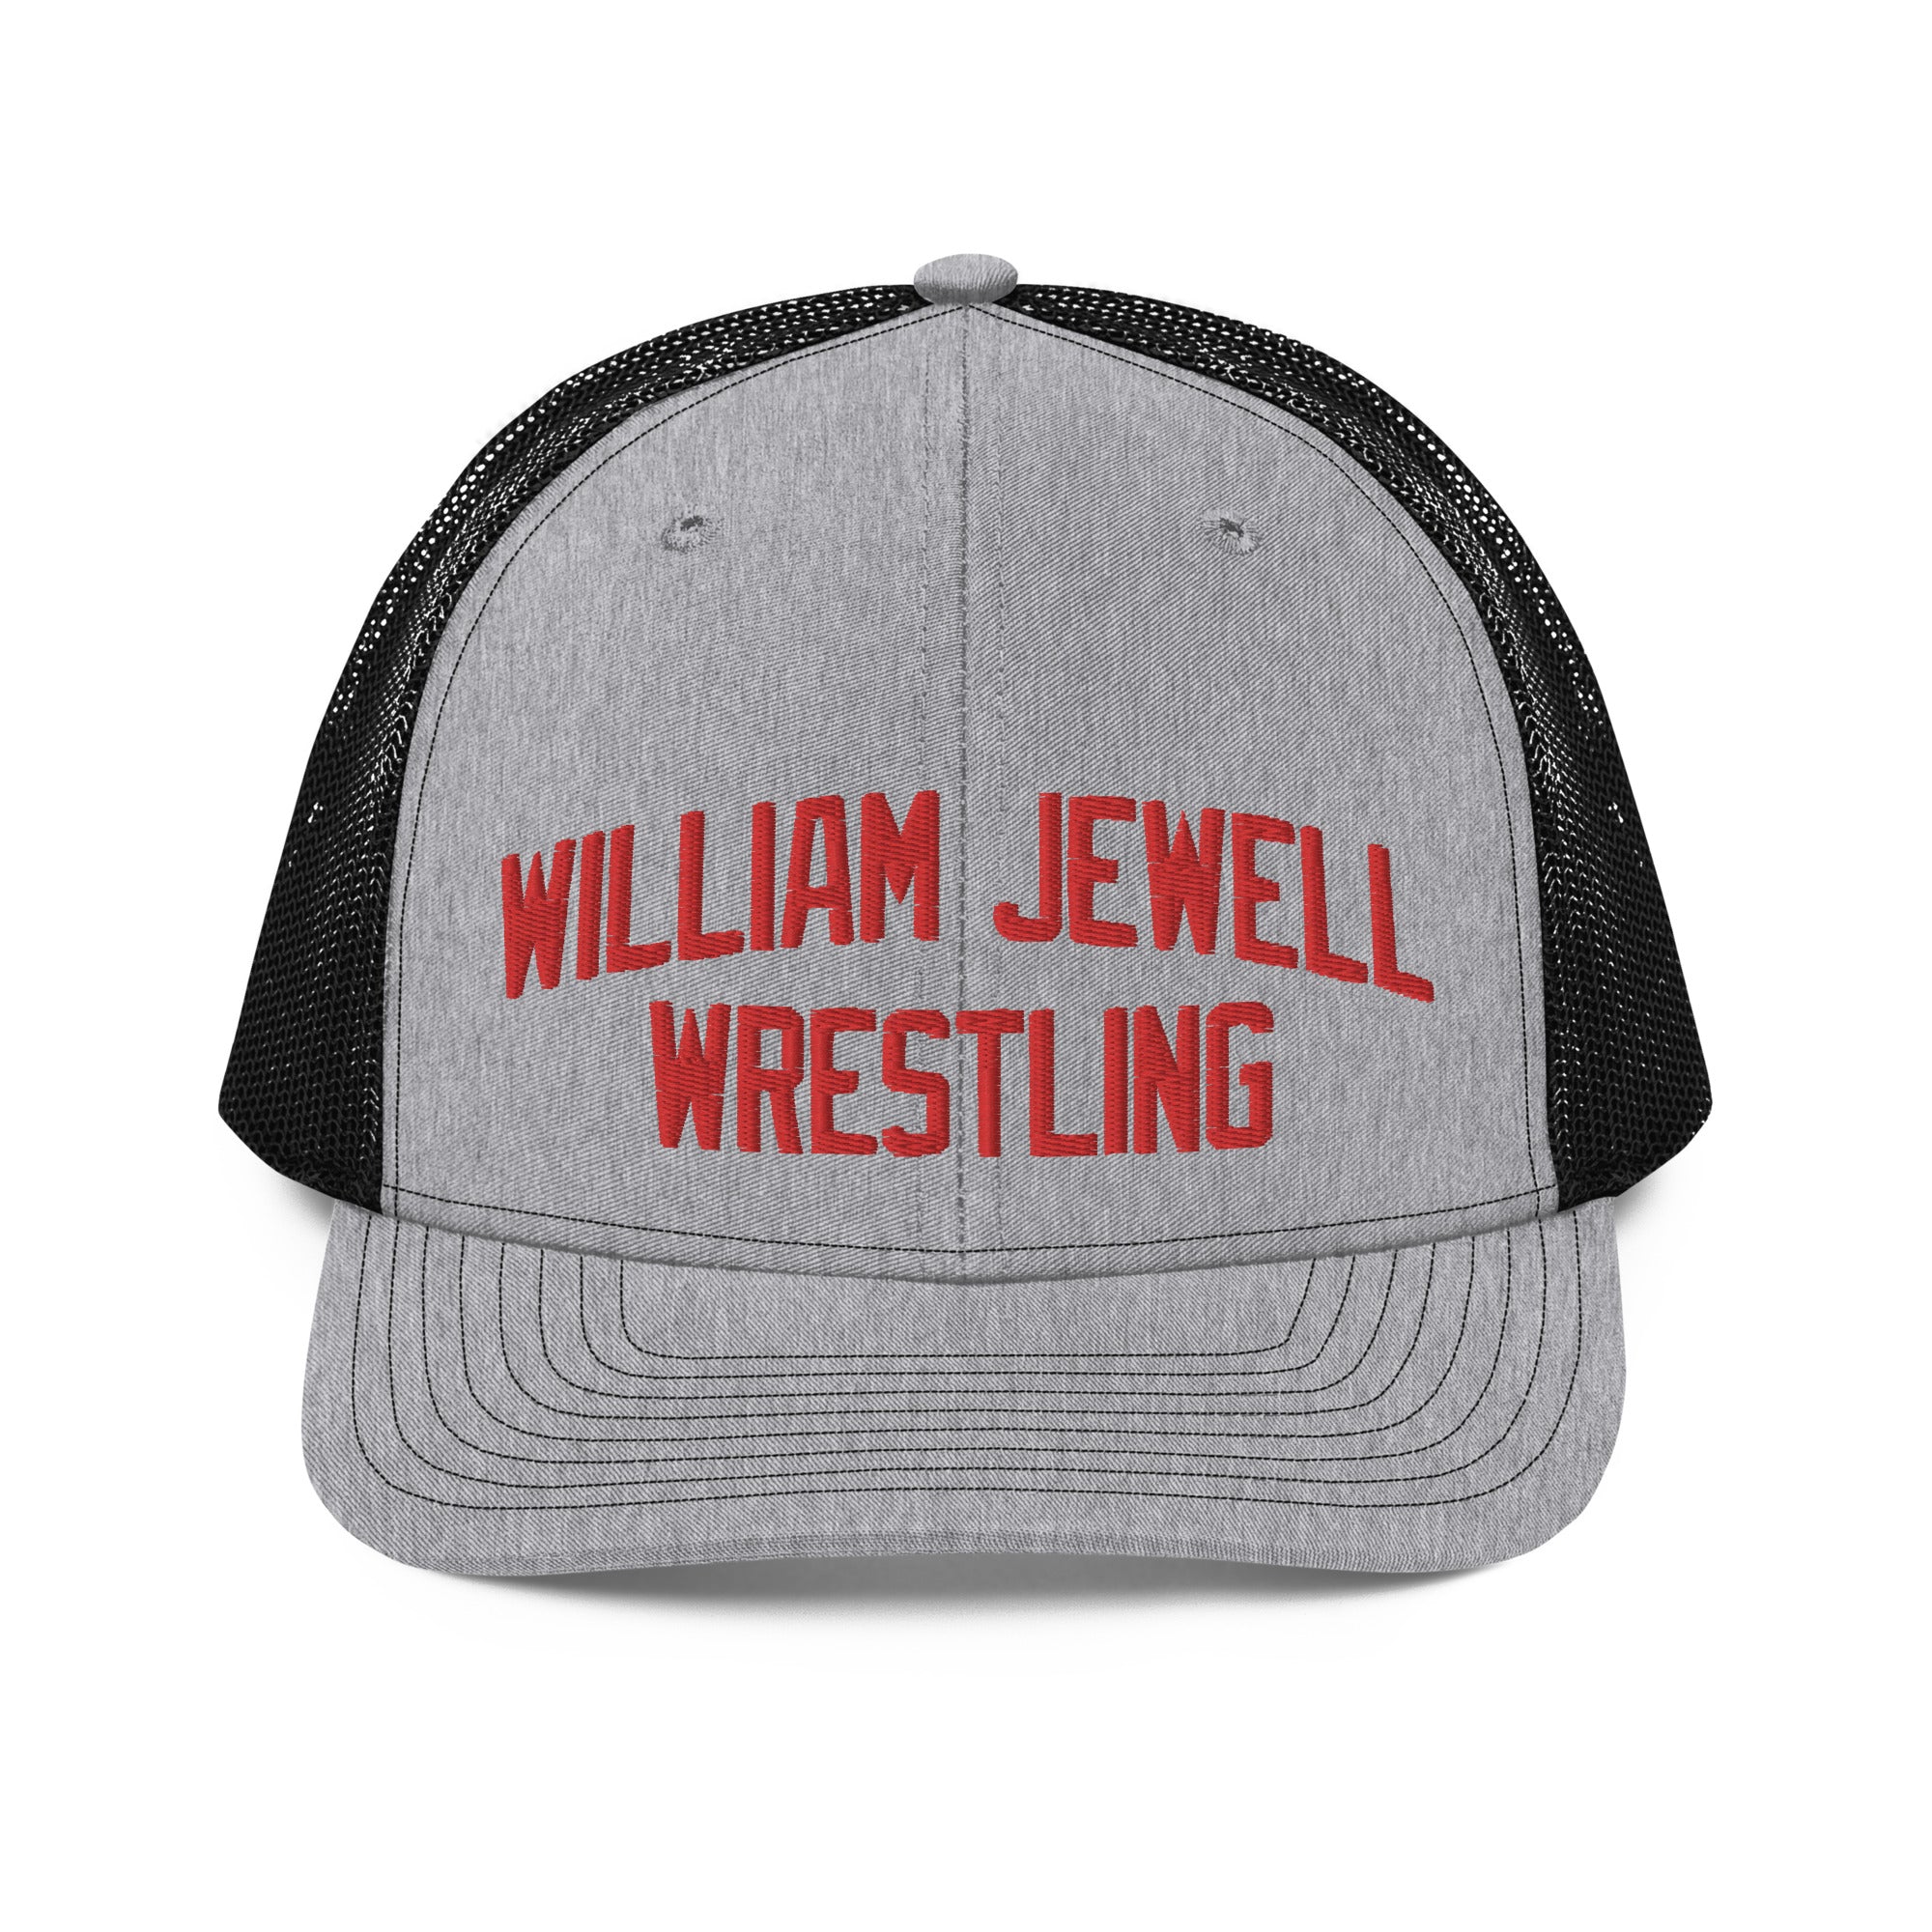 William Jewell Wrestling Snapback Trucker Cap